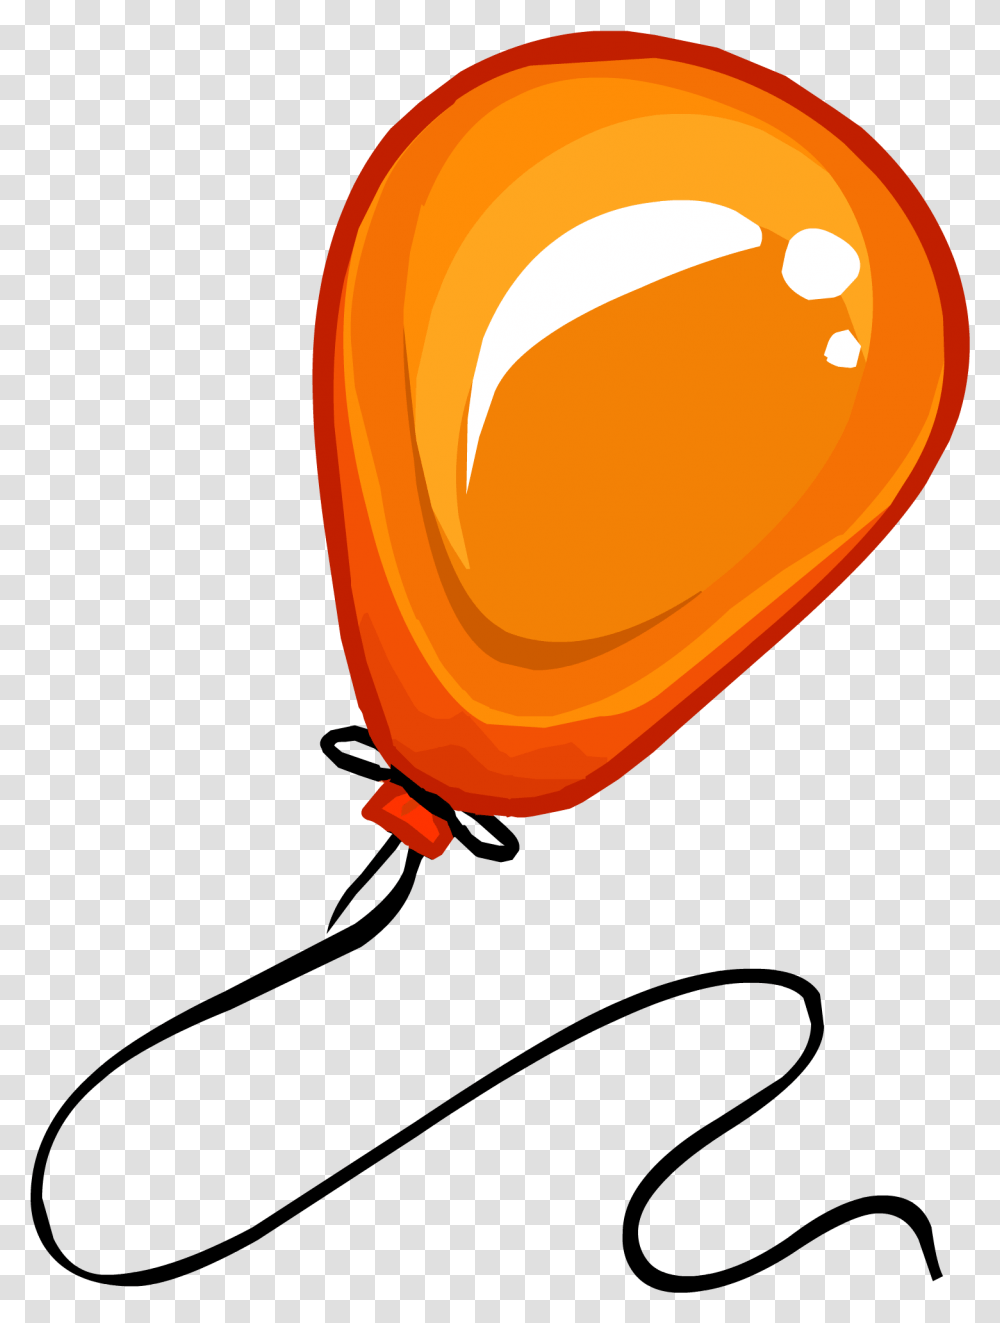 Orange Clipart Baloon 1 Balloon Clipart 1466x1971 Club Penguin Balloons, Plant, Produce, Food, Grain Transparent Png